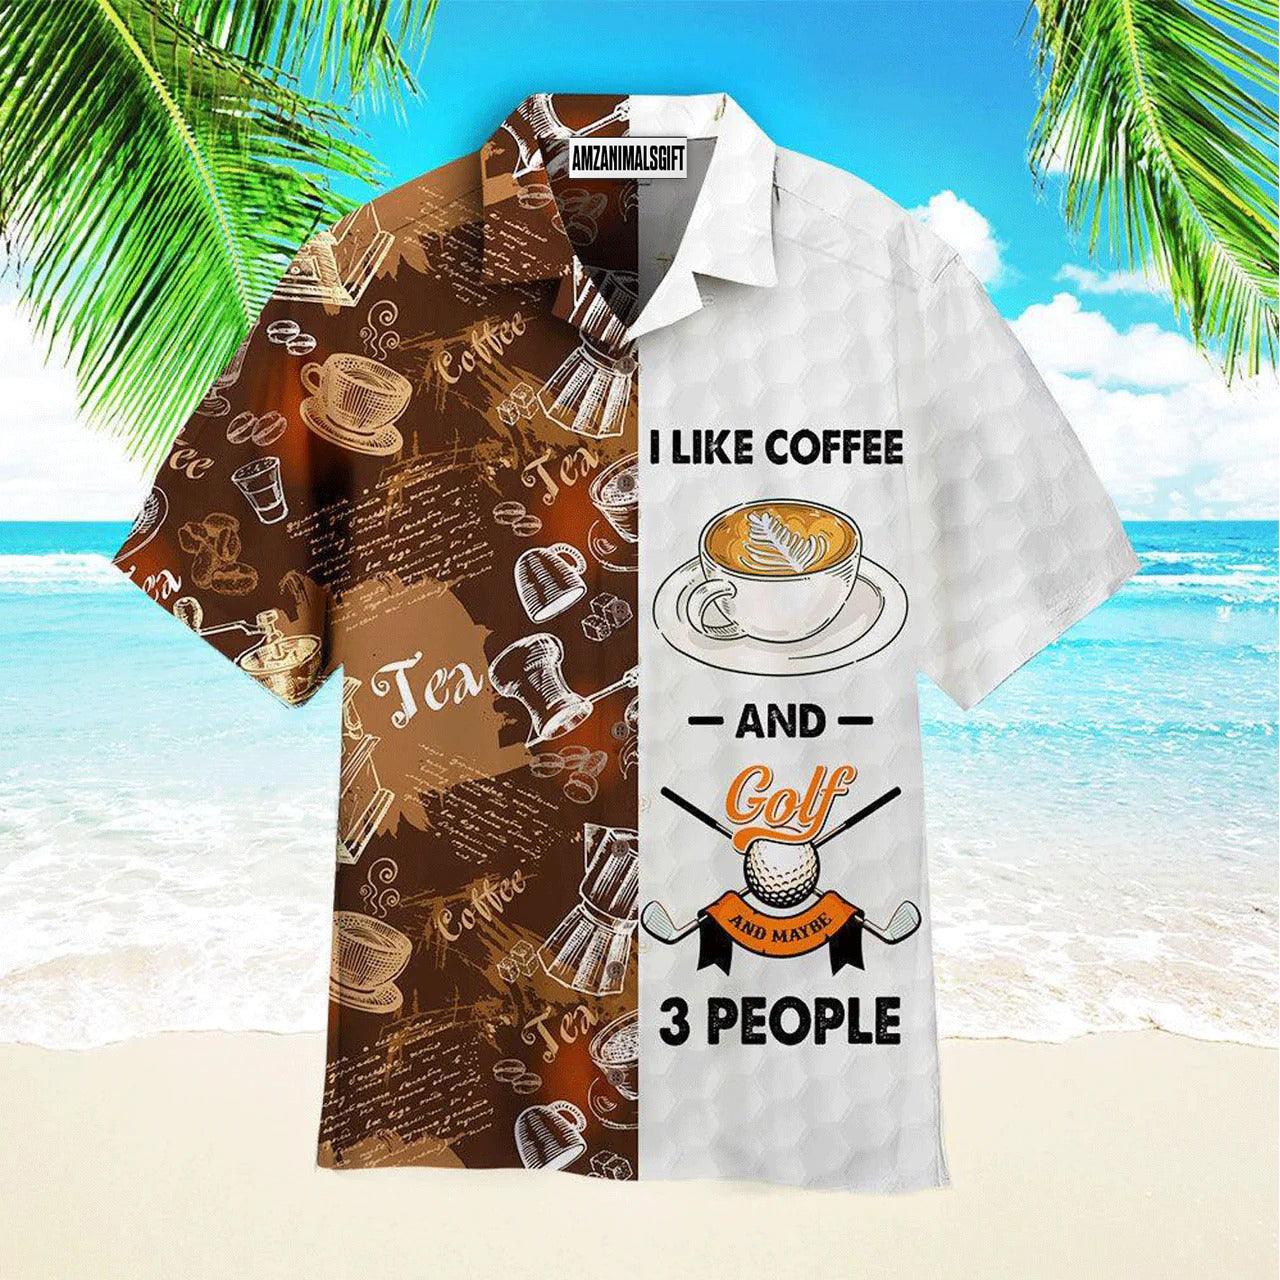 Golf Hawaiian Shirt, I Like Coffee And Golf And Maybe 3 People Aloha Hawaiian Shirts For Men and Women - Gift For Golfer, Friend, Family - Amzanimalsgift